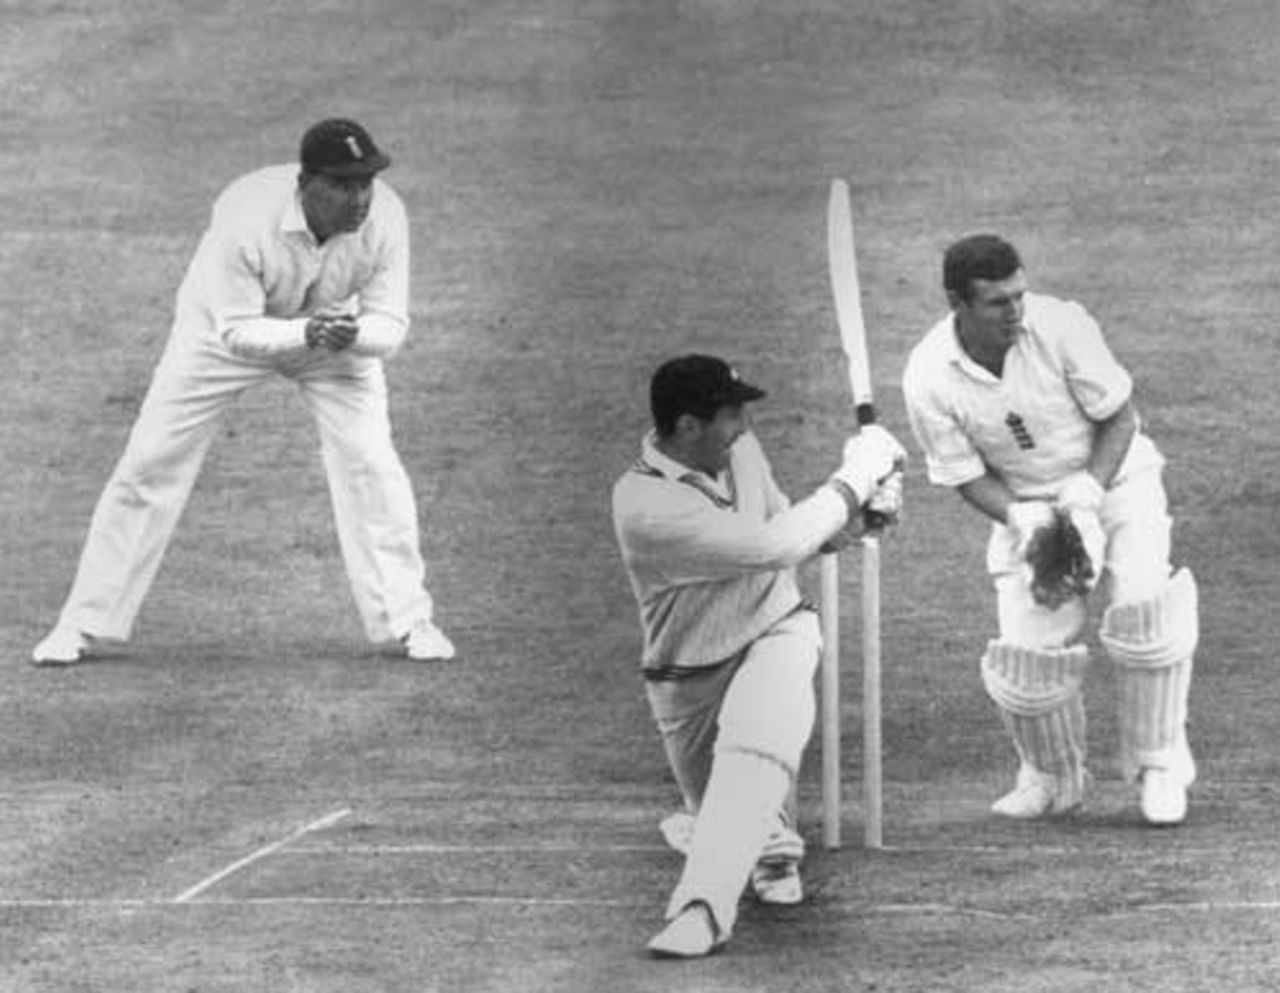 Graham Dowling bats, England v New Zealand, Edgbaston, 29th May 1965